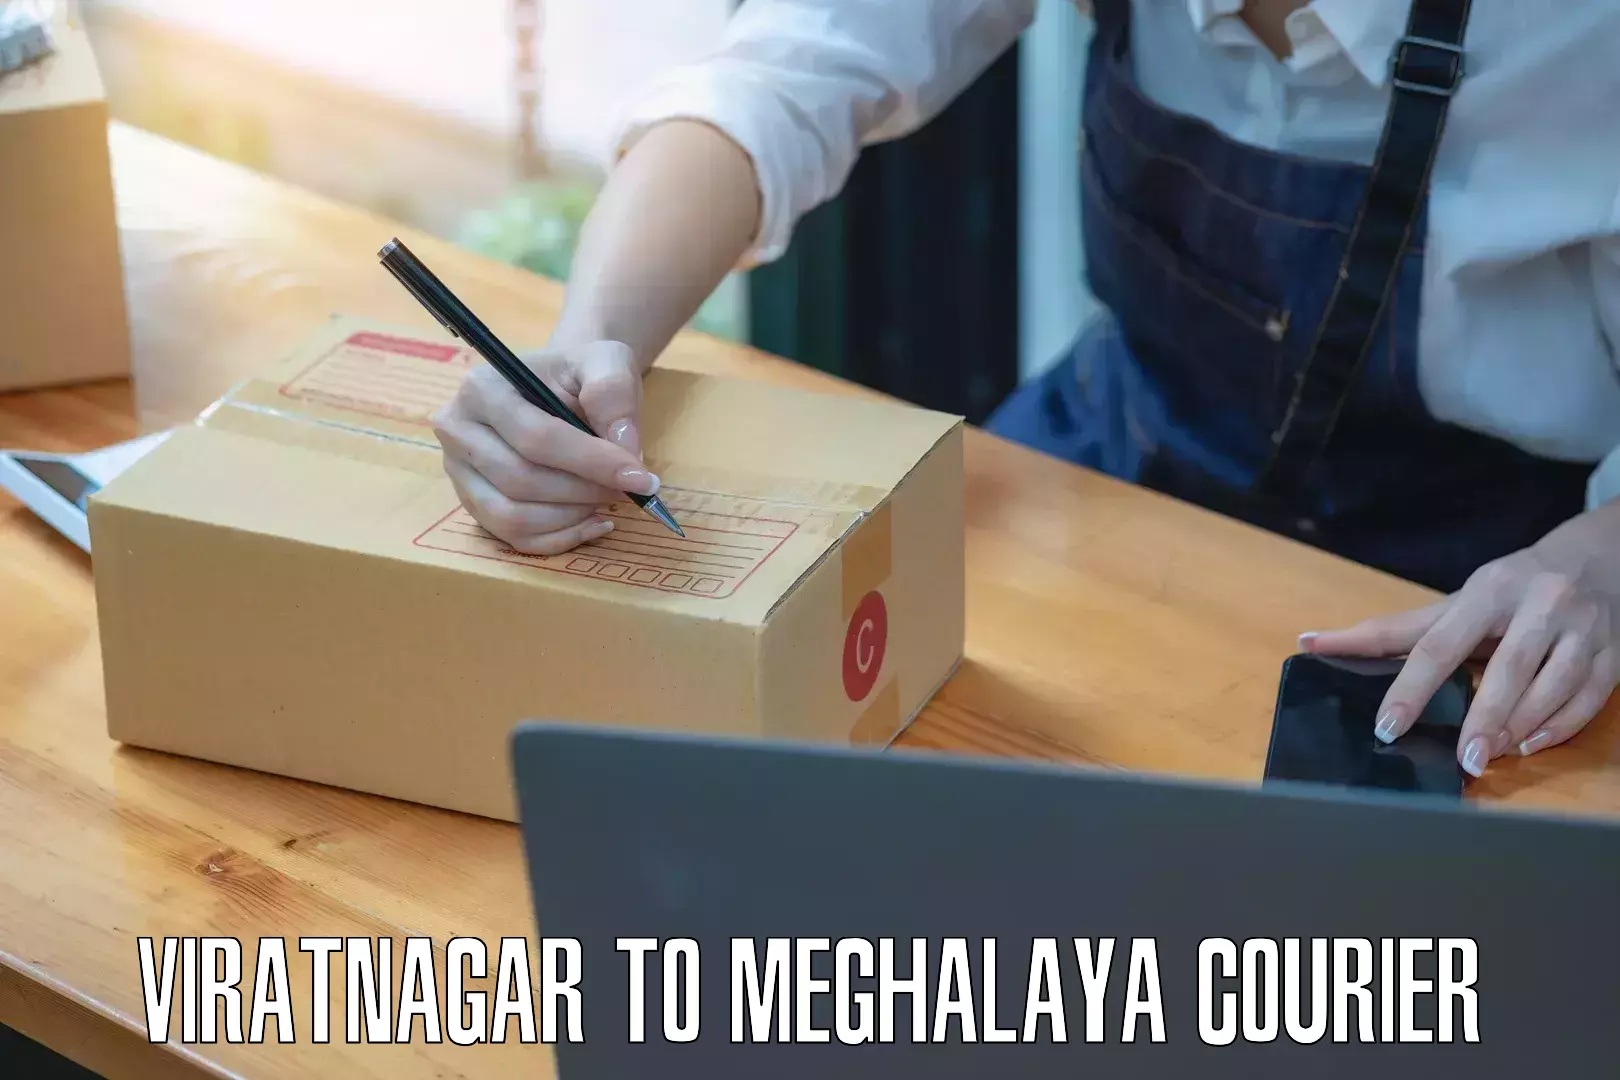 Flexible delivery schedules Viratnagar to Meghalaya